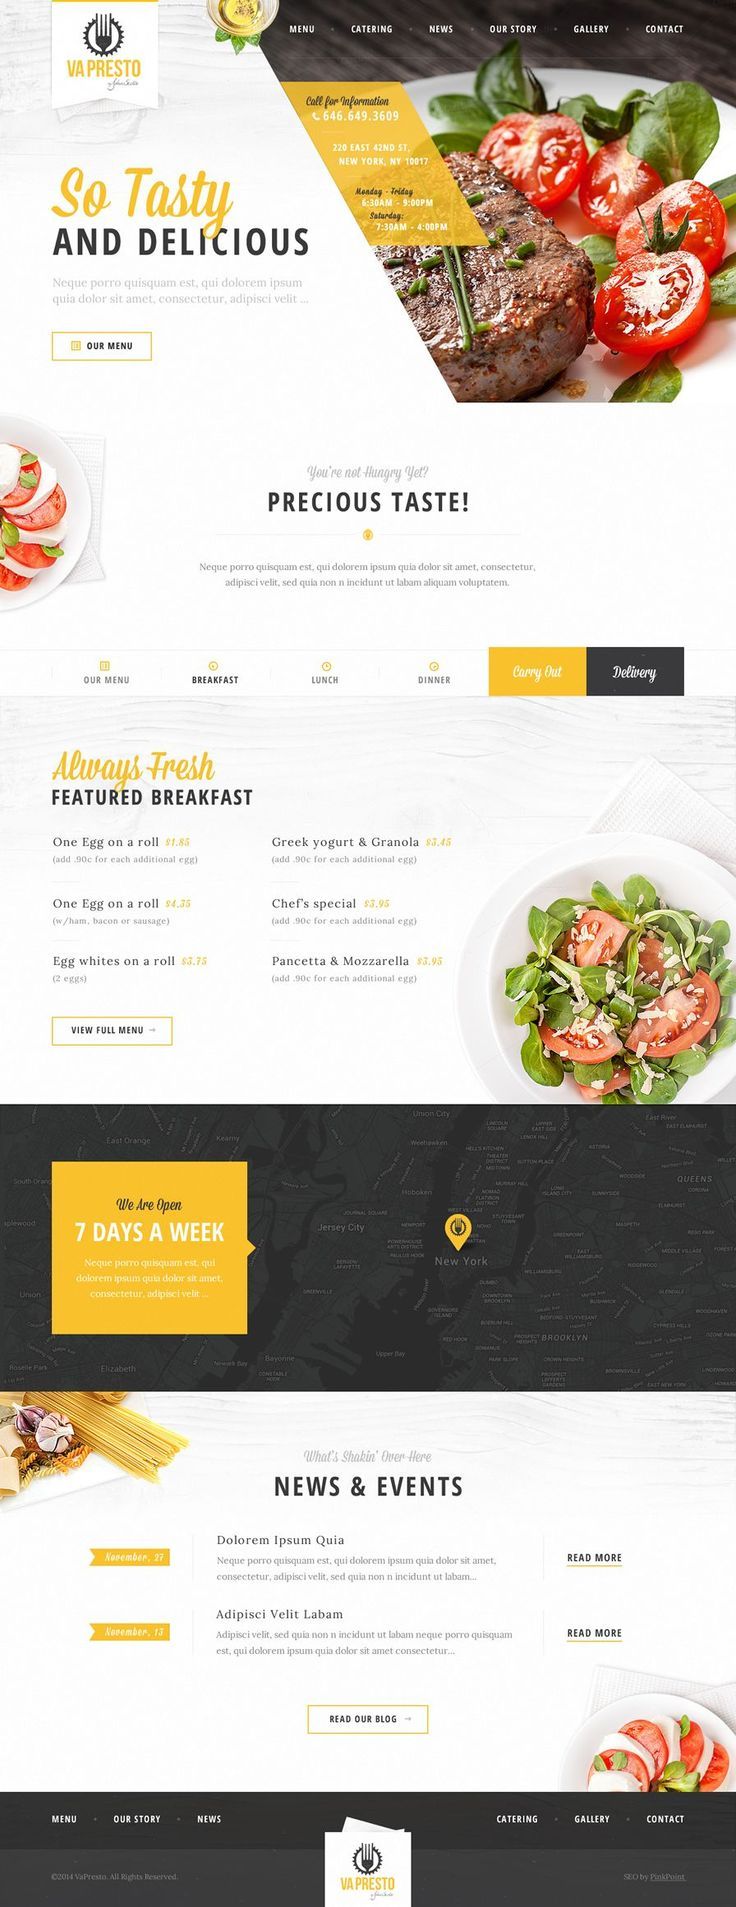 restaurant website idea. #webdesign #inspiration